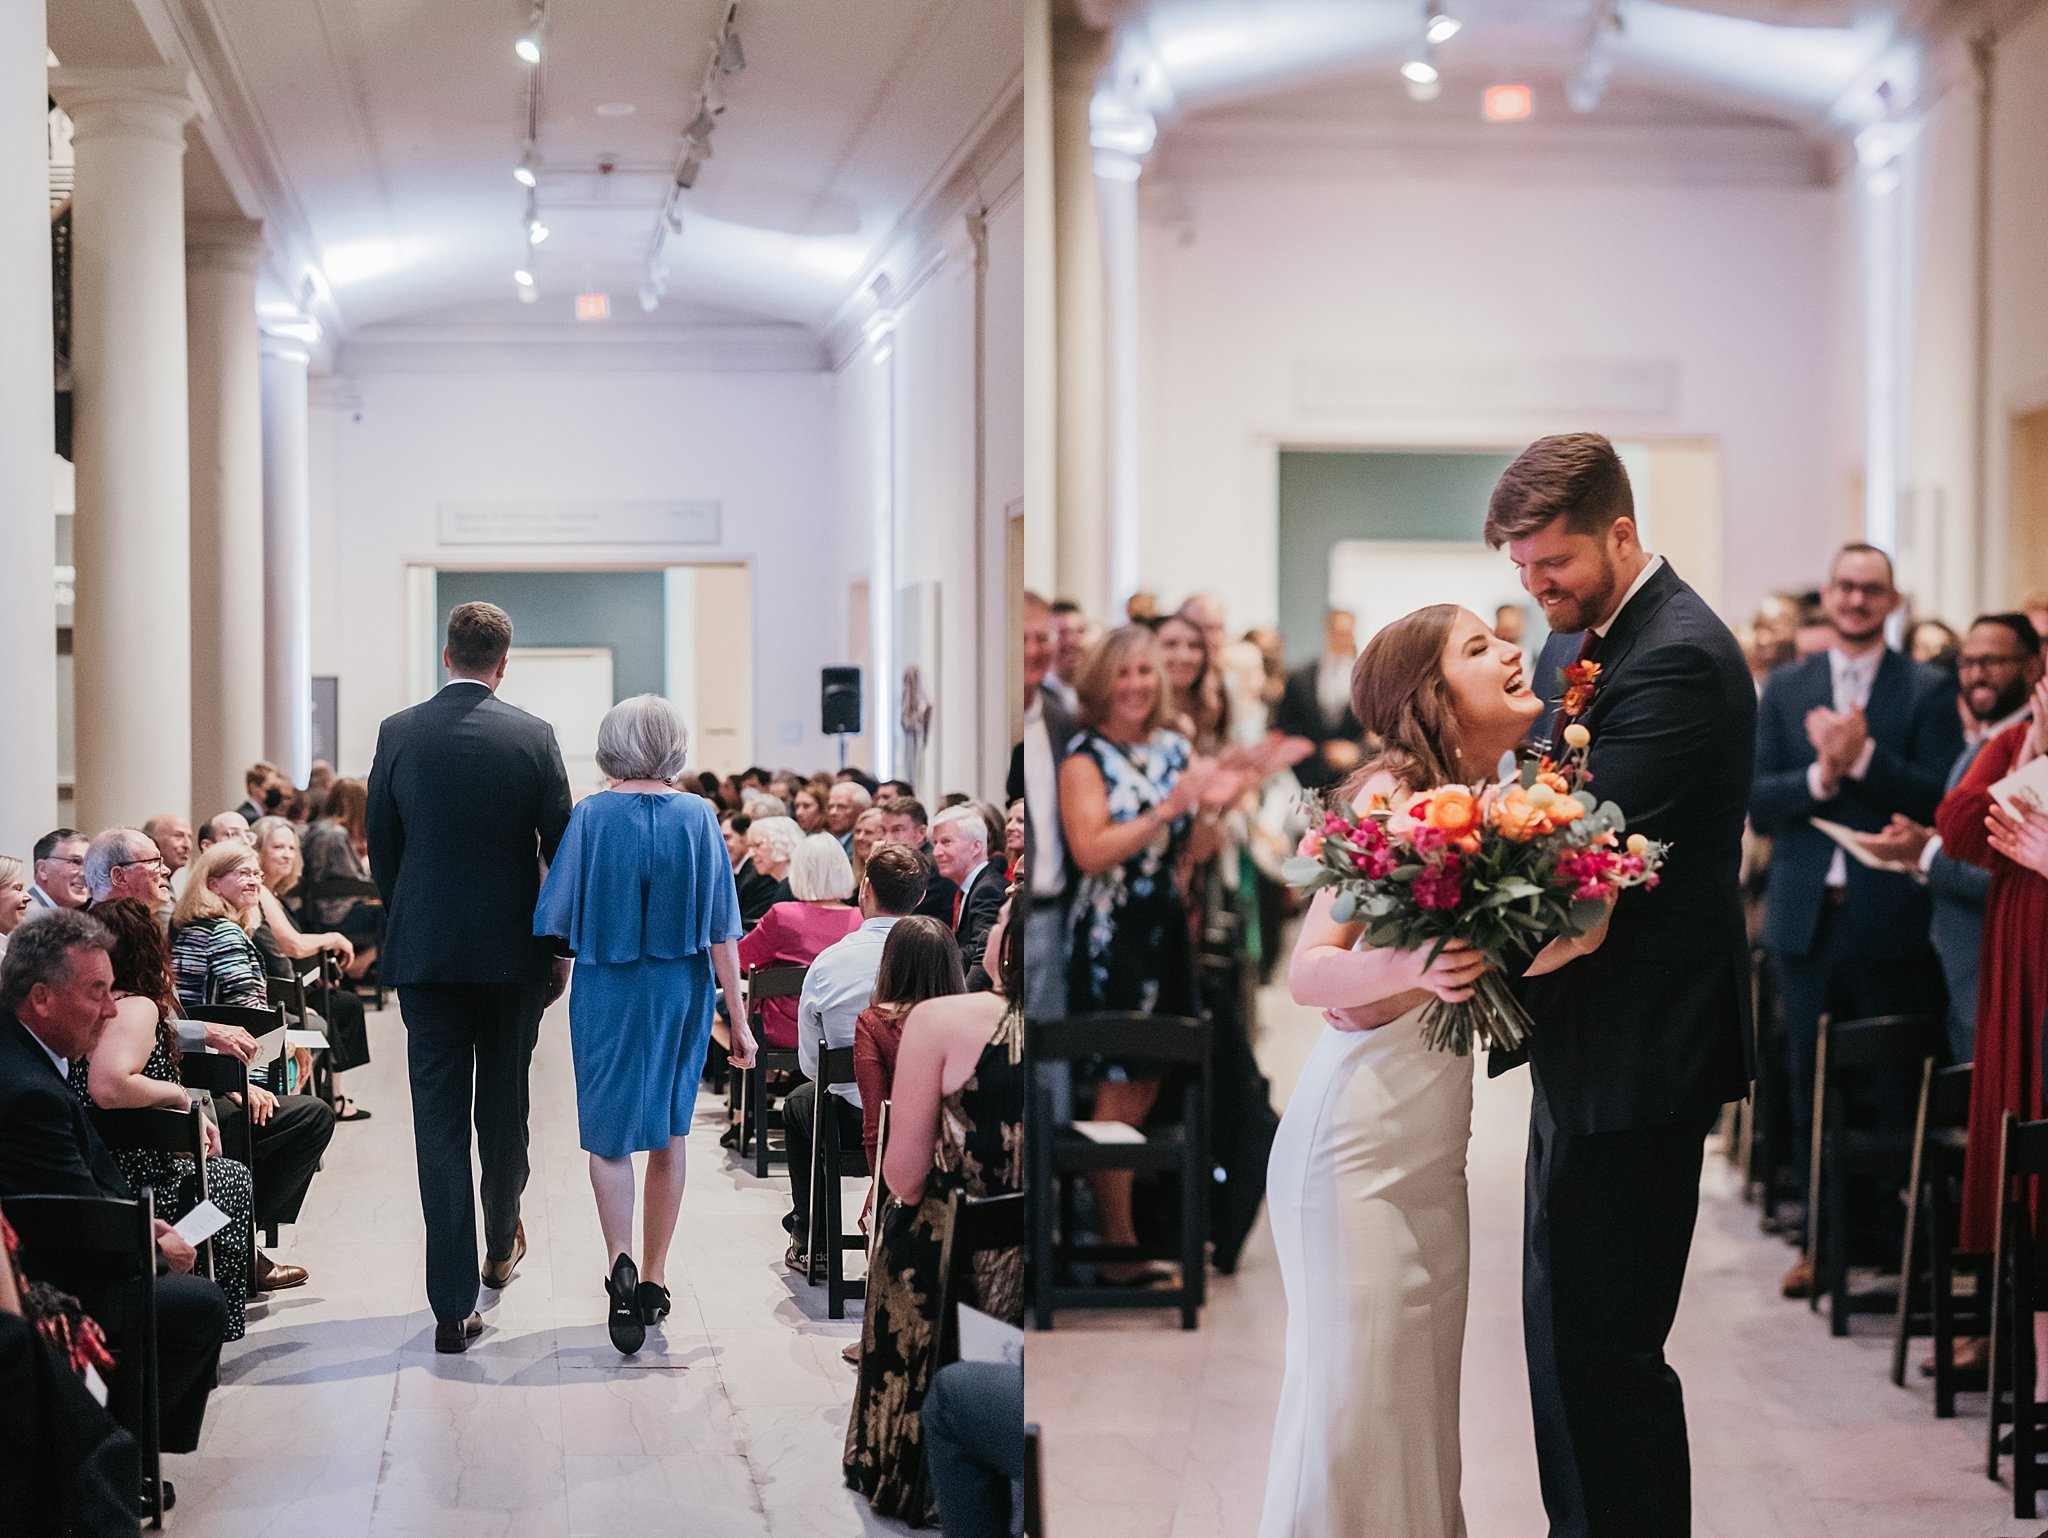 Minneapolis Institute of Art wedding ceremony